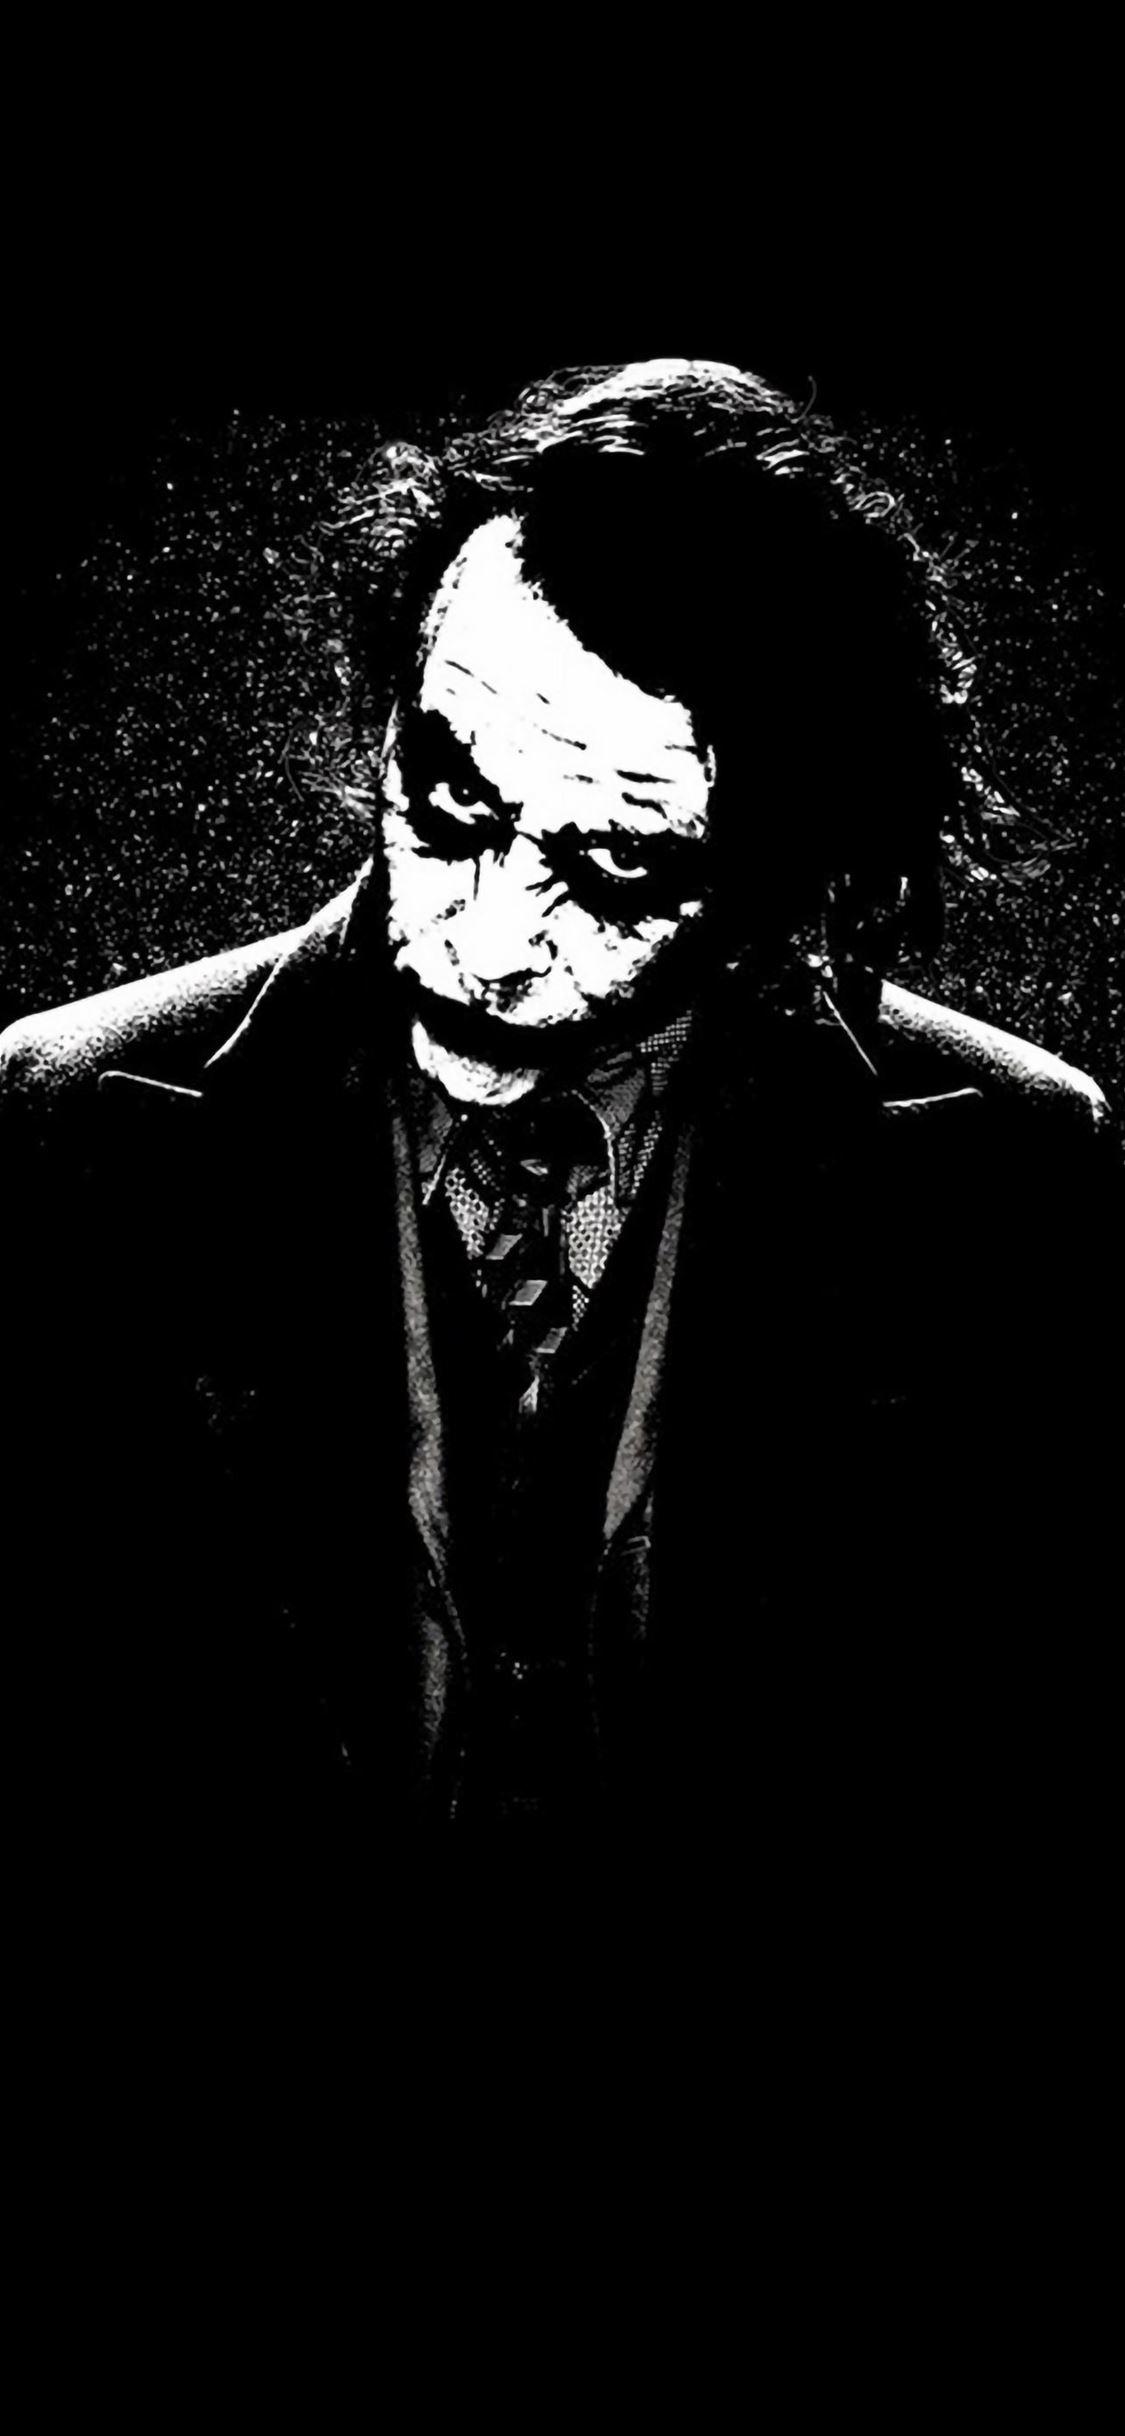 The Joker Batman Black White Painting Art iPhone wallpaper 